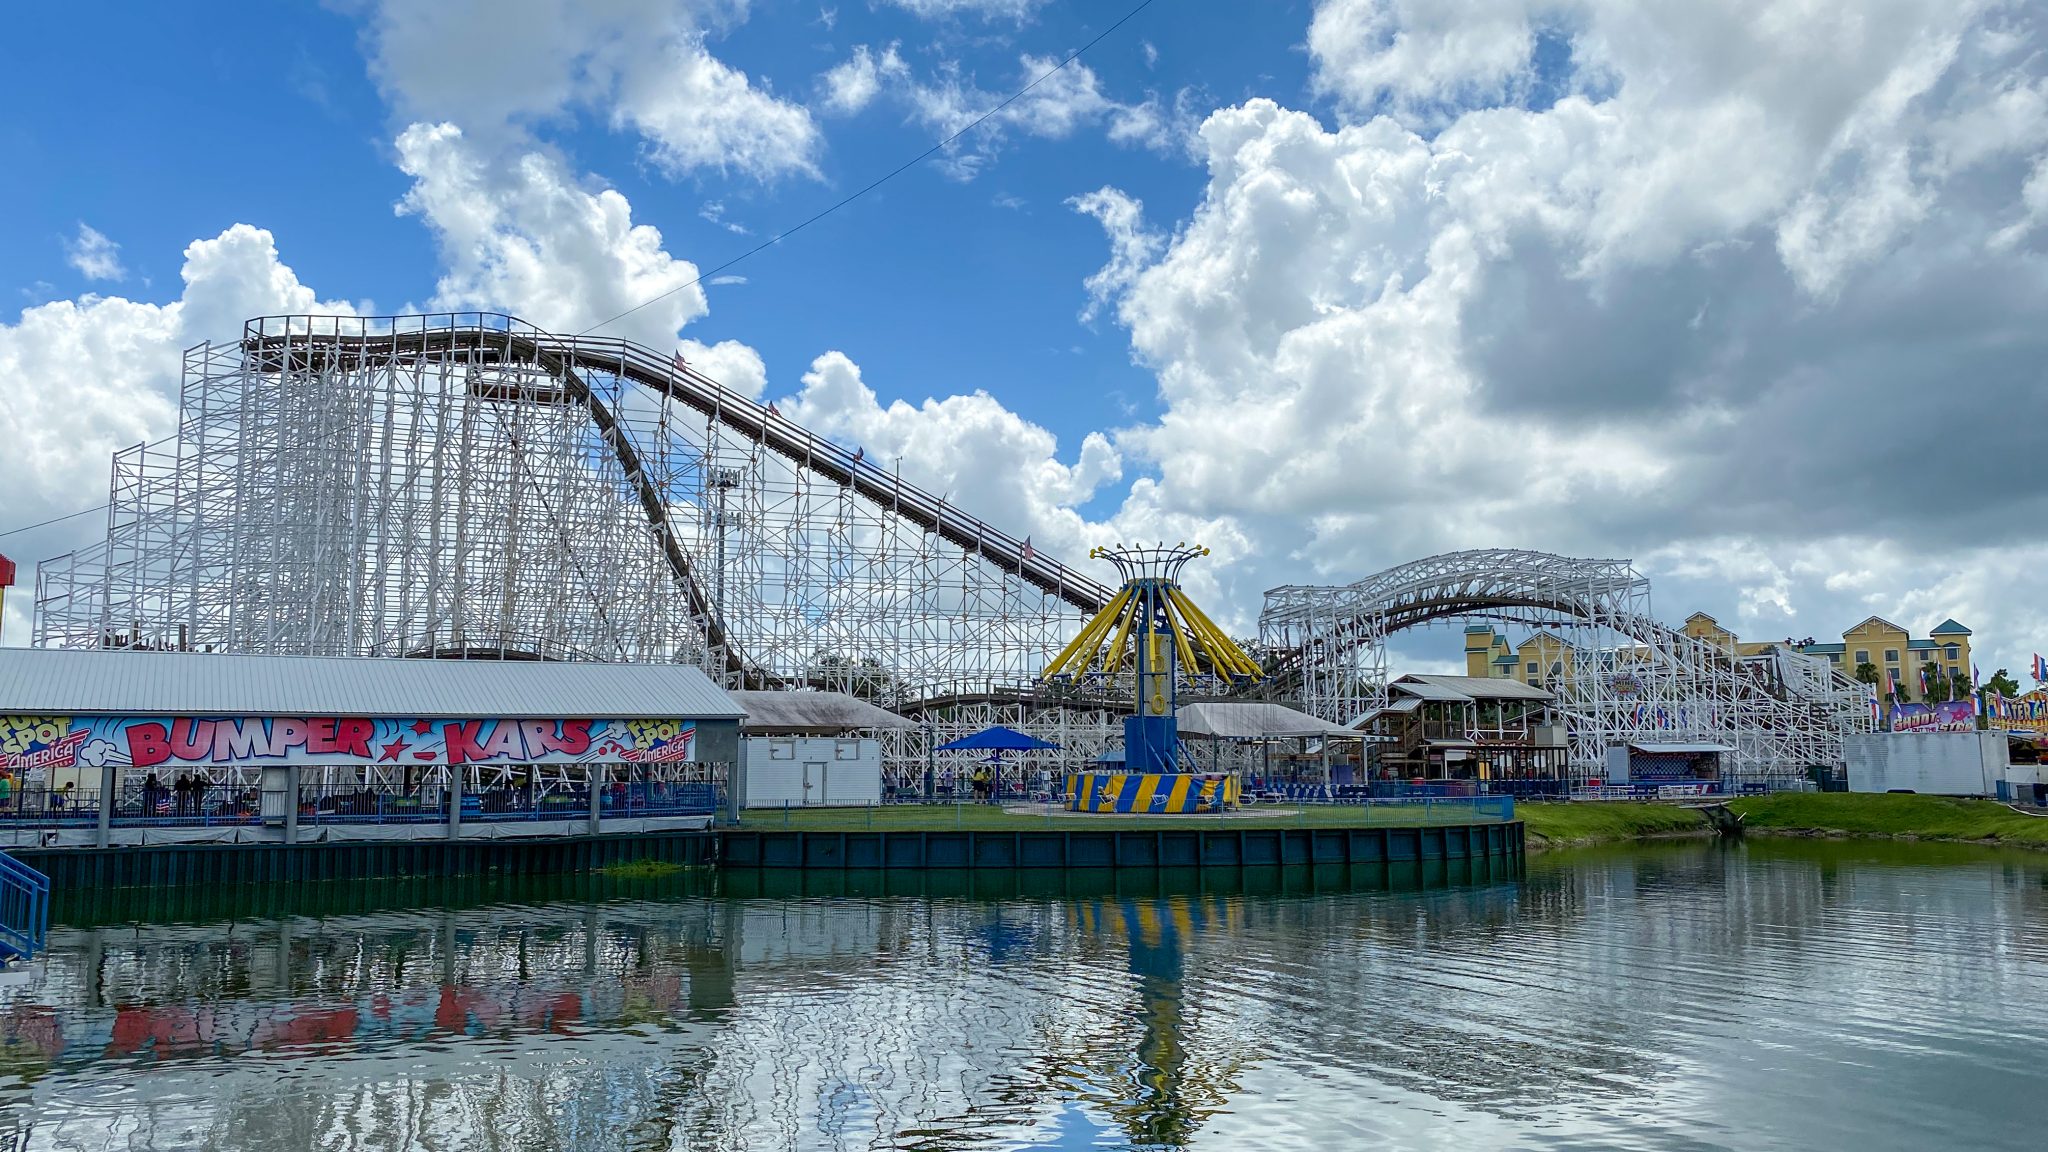 Wooden Rollercoaster at Fun Spot Orlando